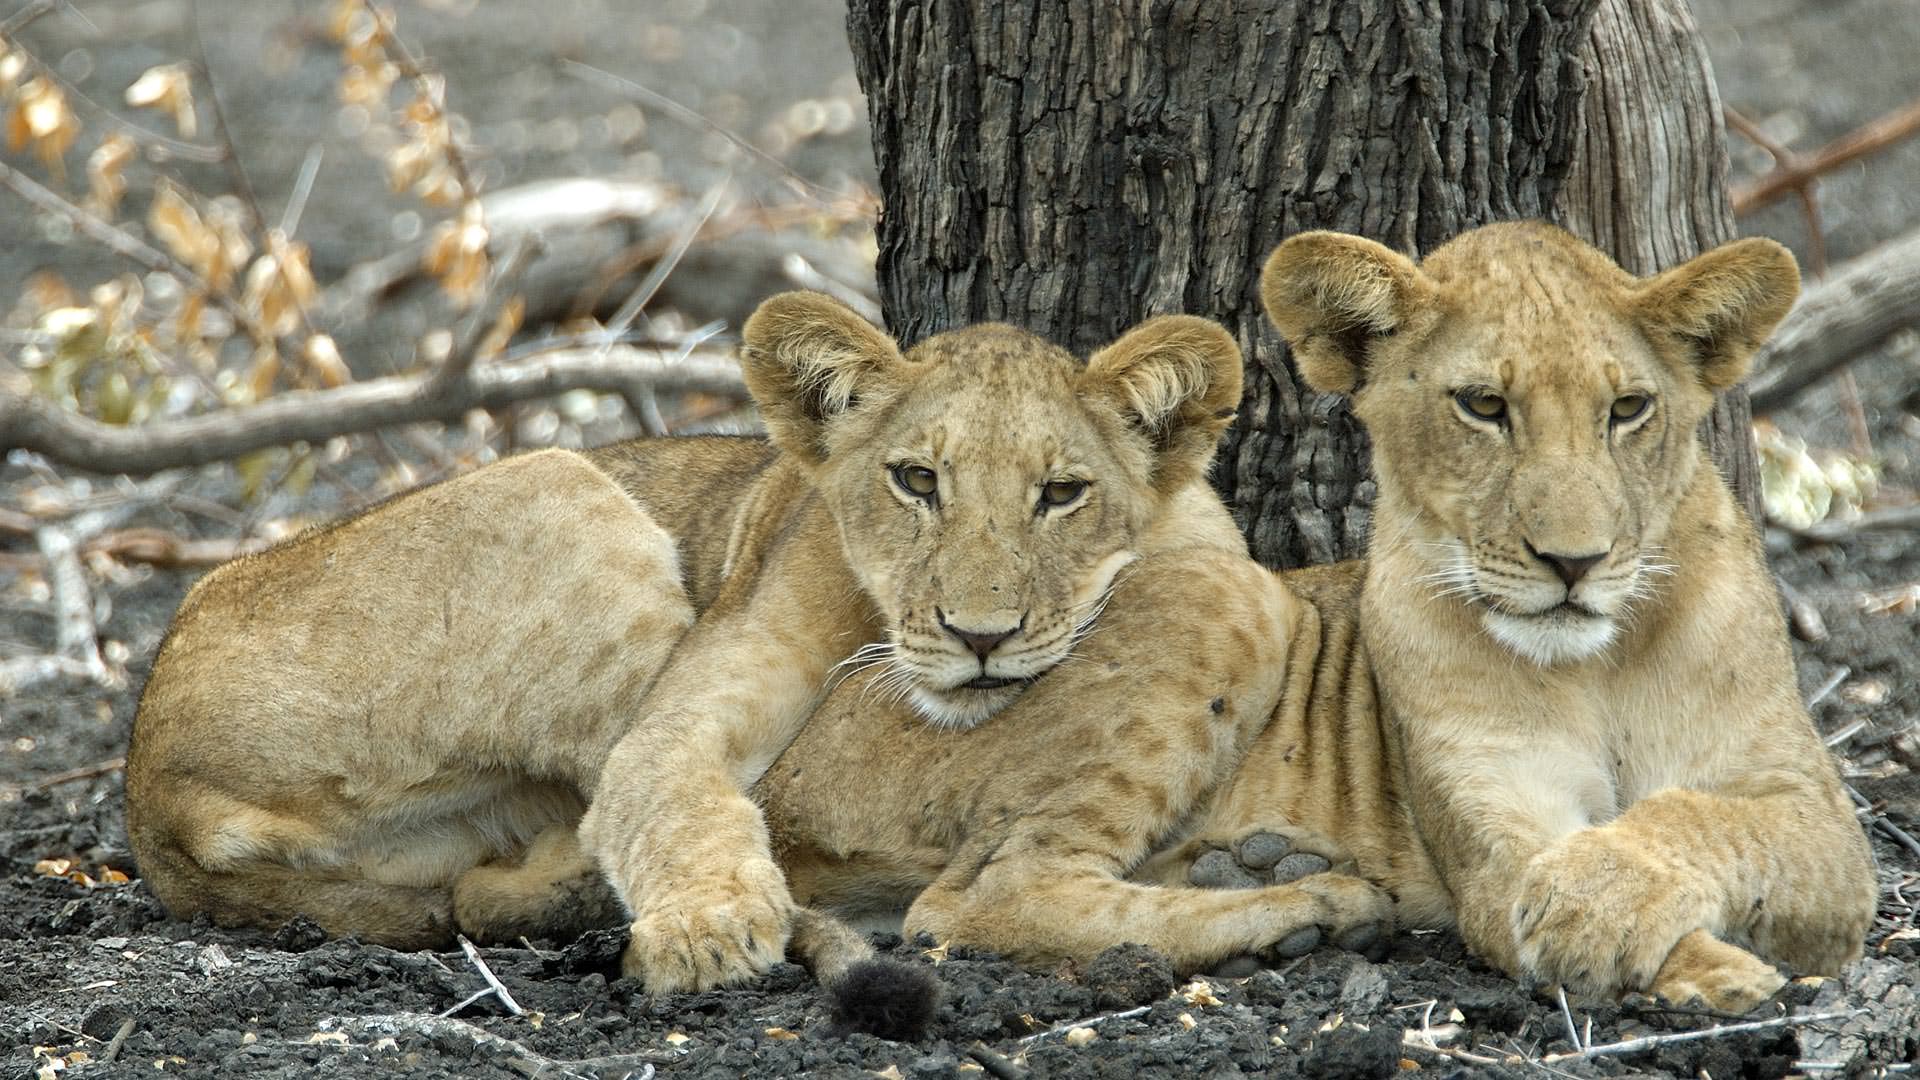 Roho ya Selous - 2 large lion cubs under a tree